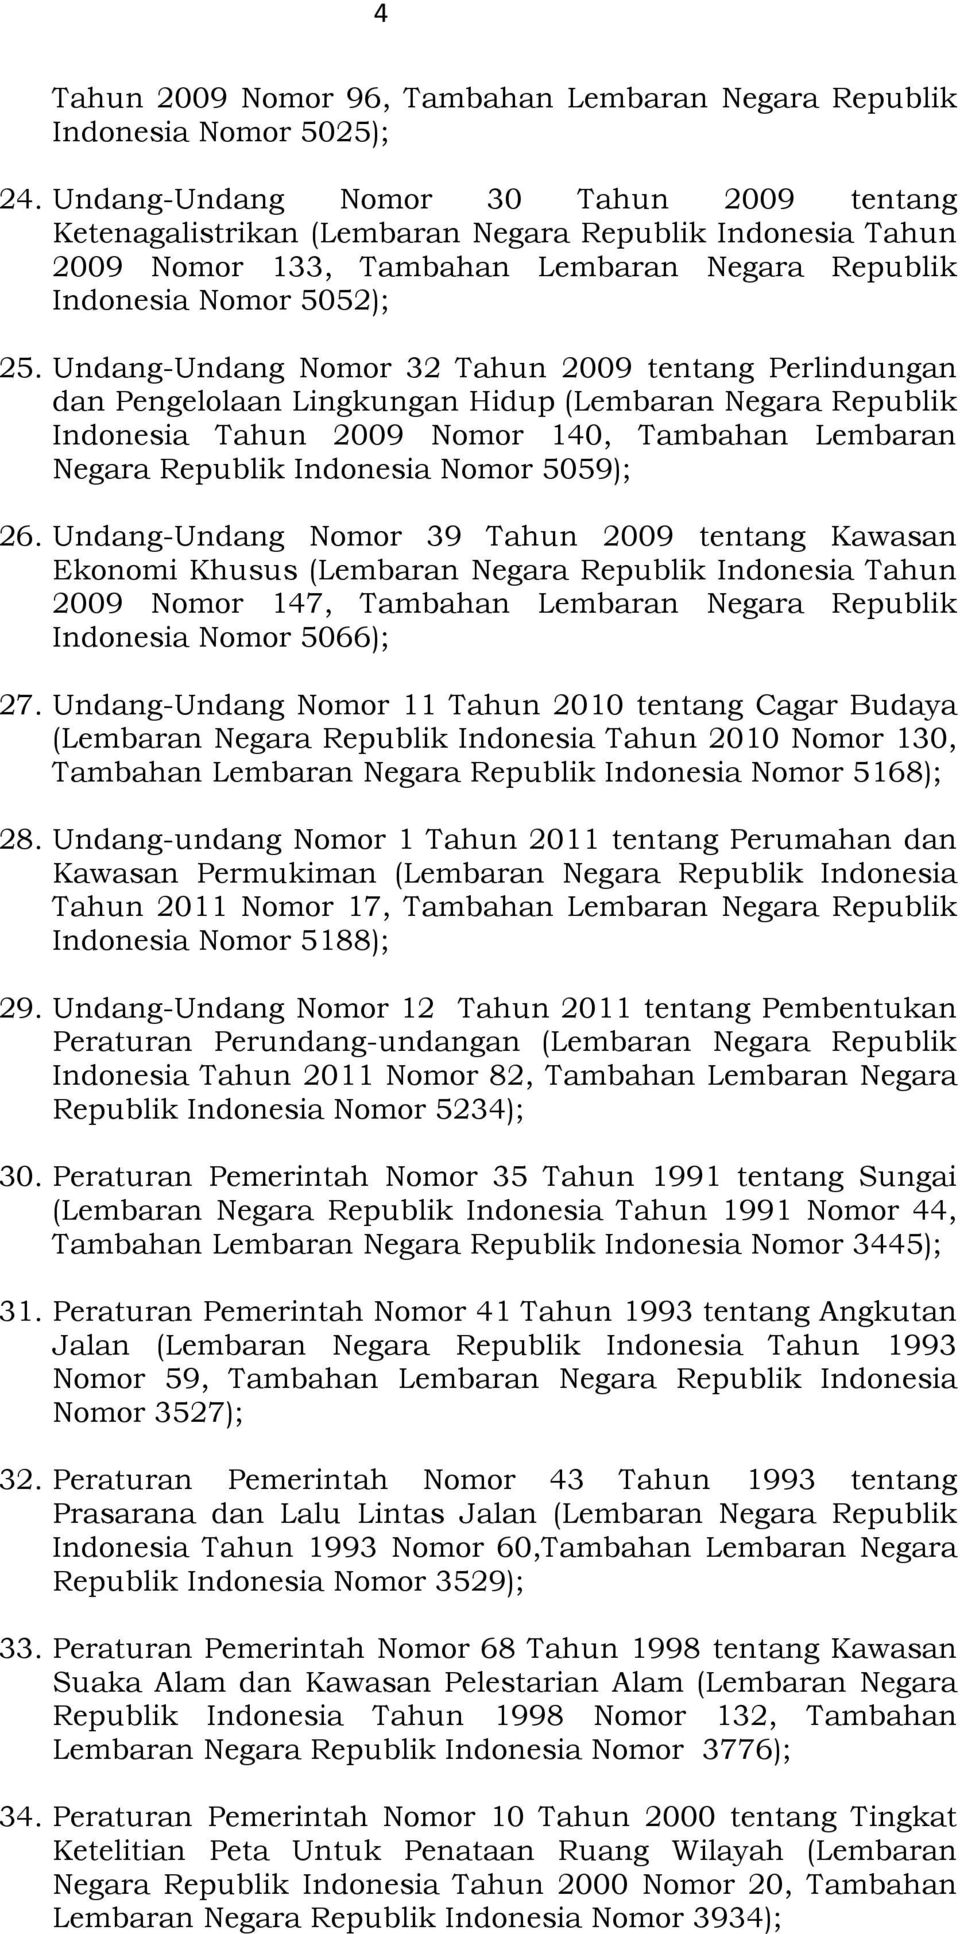 Undang-Undang Nomor 32 Tahun 2009 tentang Perlindungan dan Pengelolaan Lingkungan Hidup (Lembaran Negara Republik Indonesia Tahun 2009 Nomor 140, Tambahan Lembaran Negara Republik Indonesia Nomor